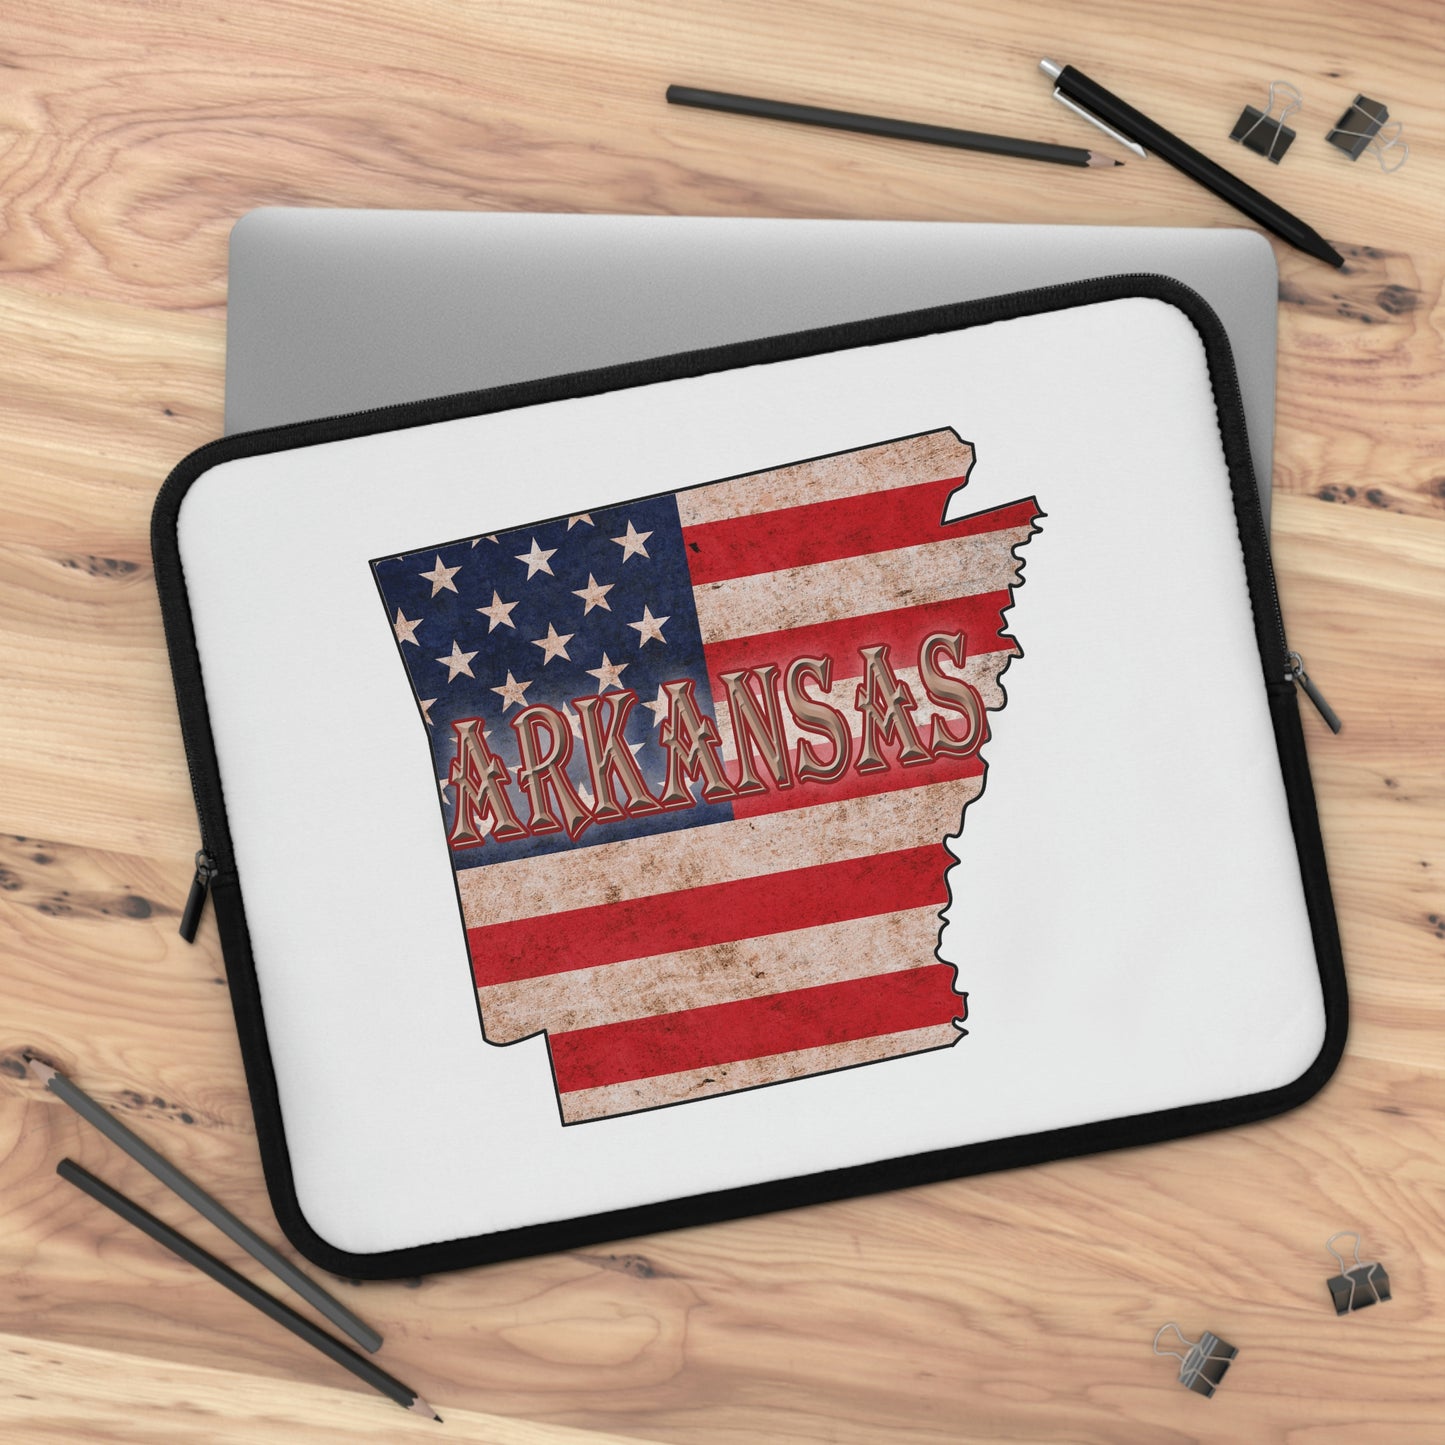 Arkansas US Flag Laptop Sleeve